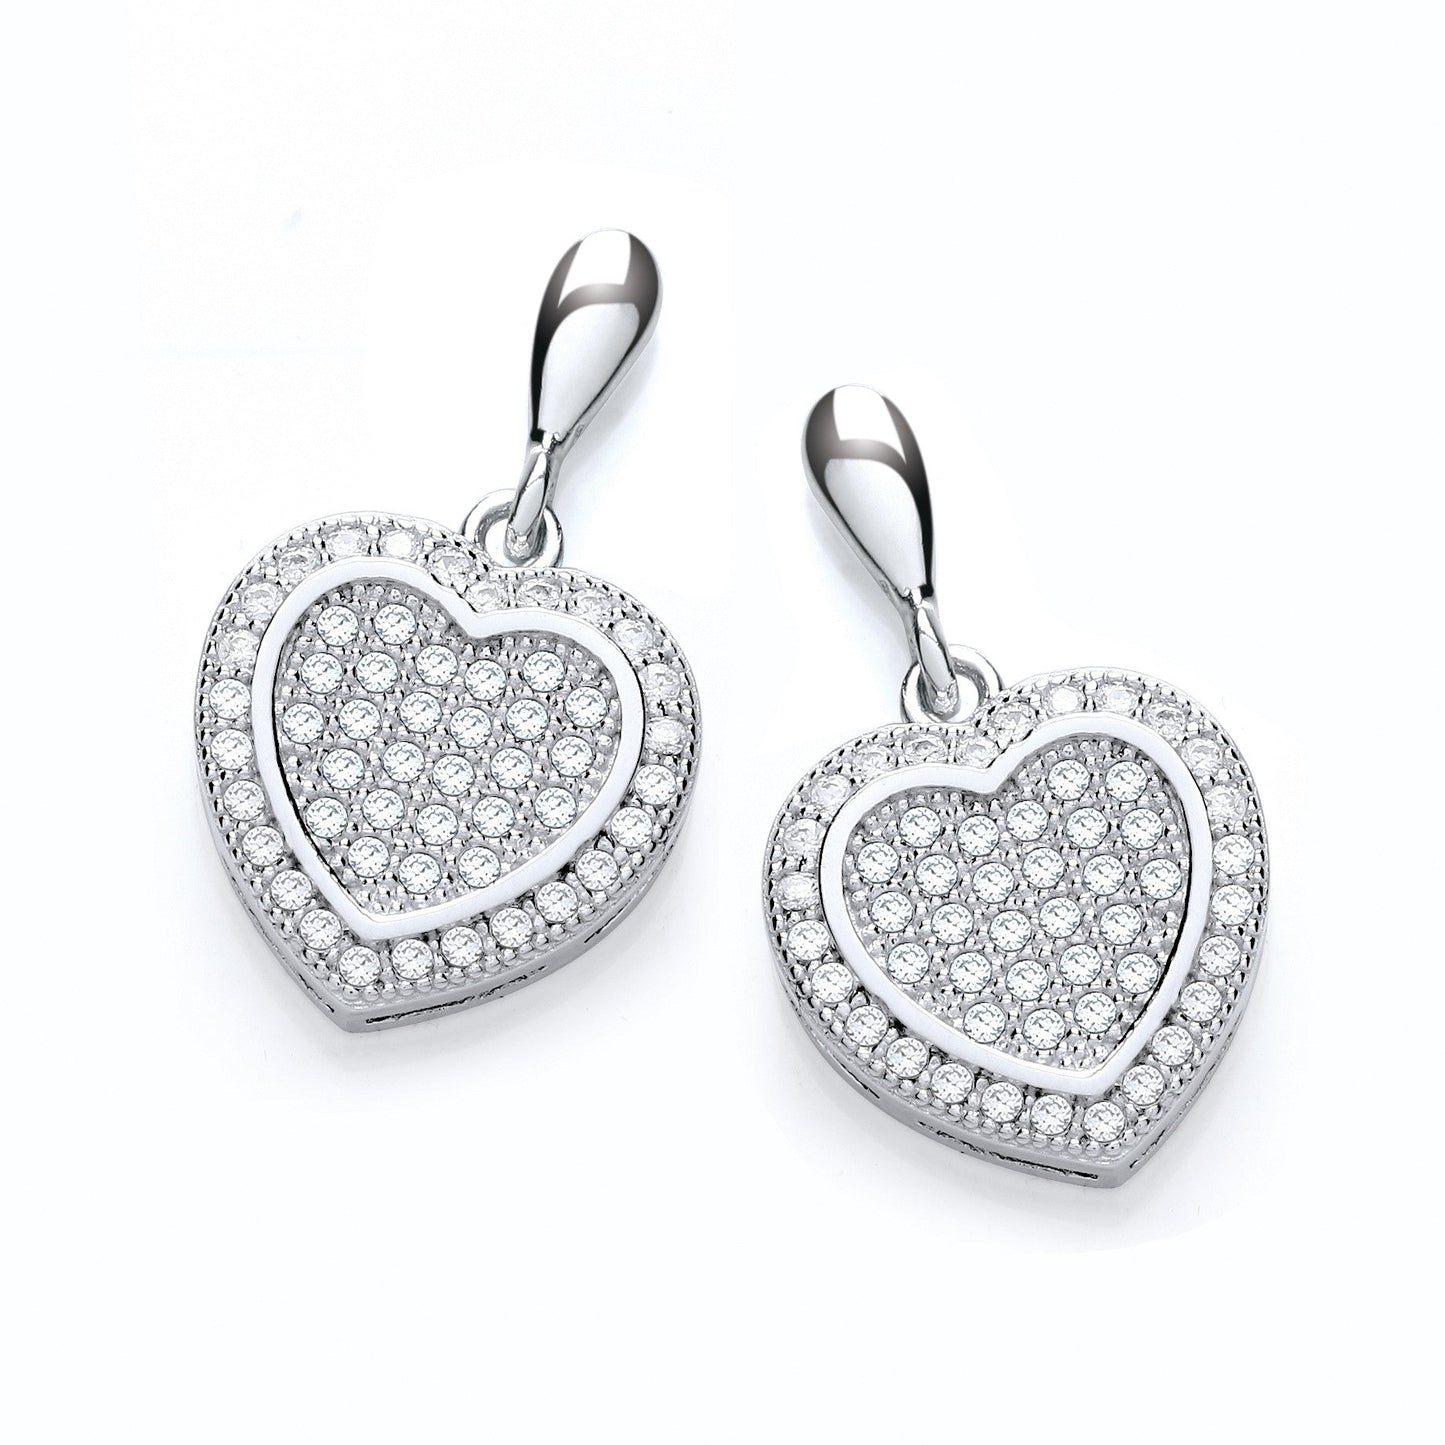 Heart Drop 925 Sterling Silver Earrings Set With CZs - FJewellery